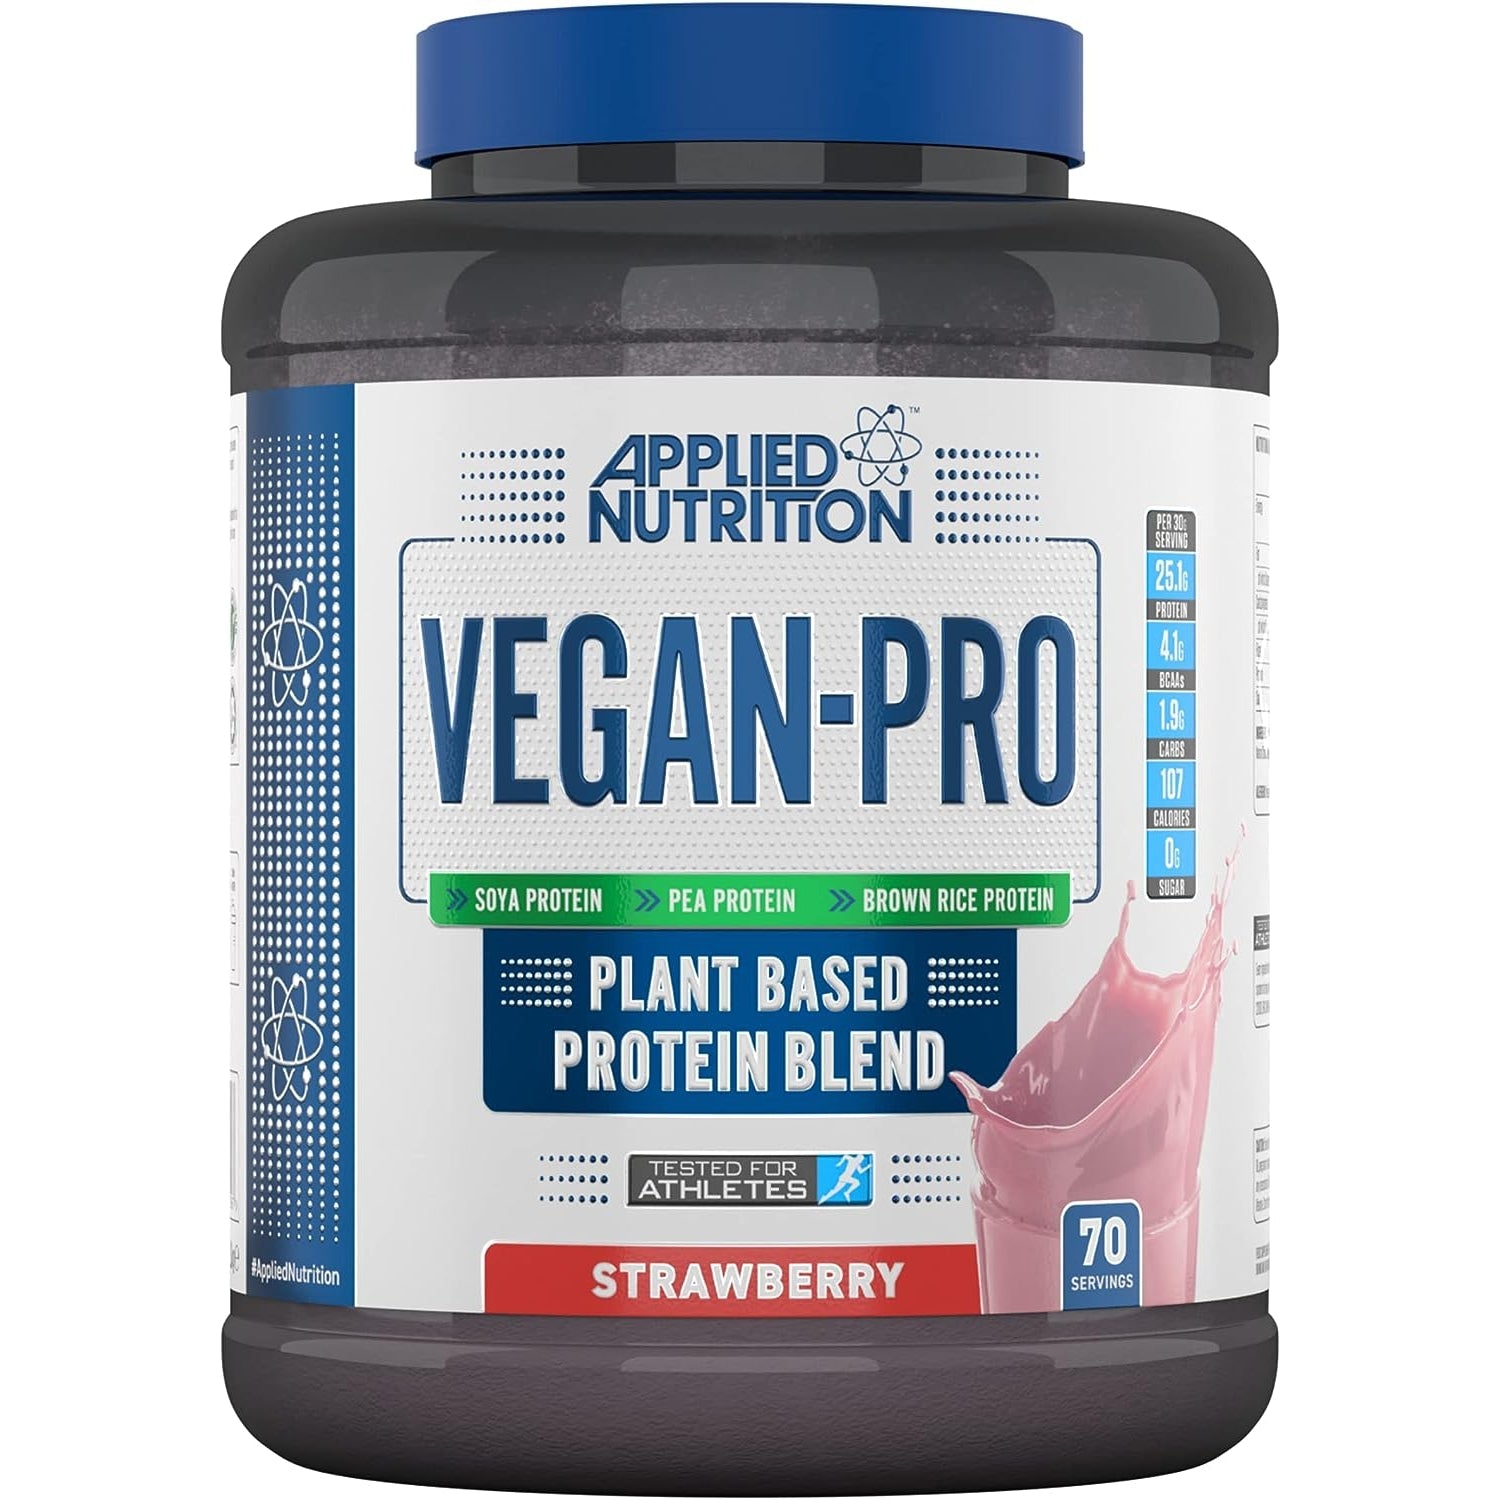 Applied Nutrition Vegan Pro Plant Based Protein Blend Vegan Strawberry 2.1kg - 70 Servings